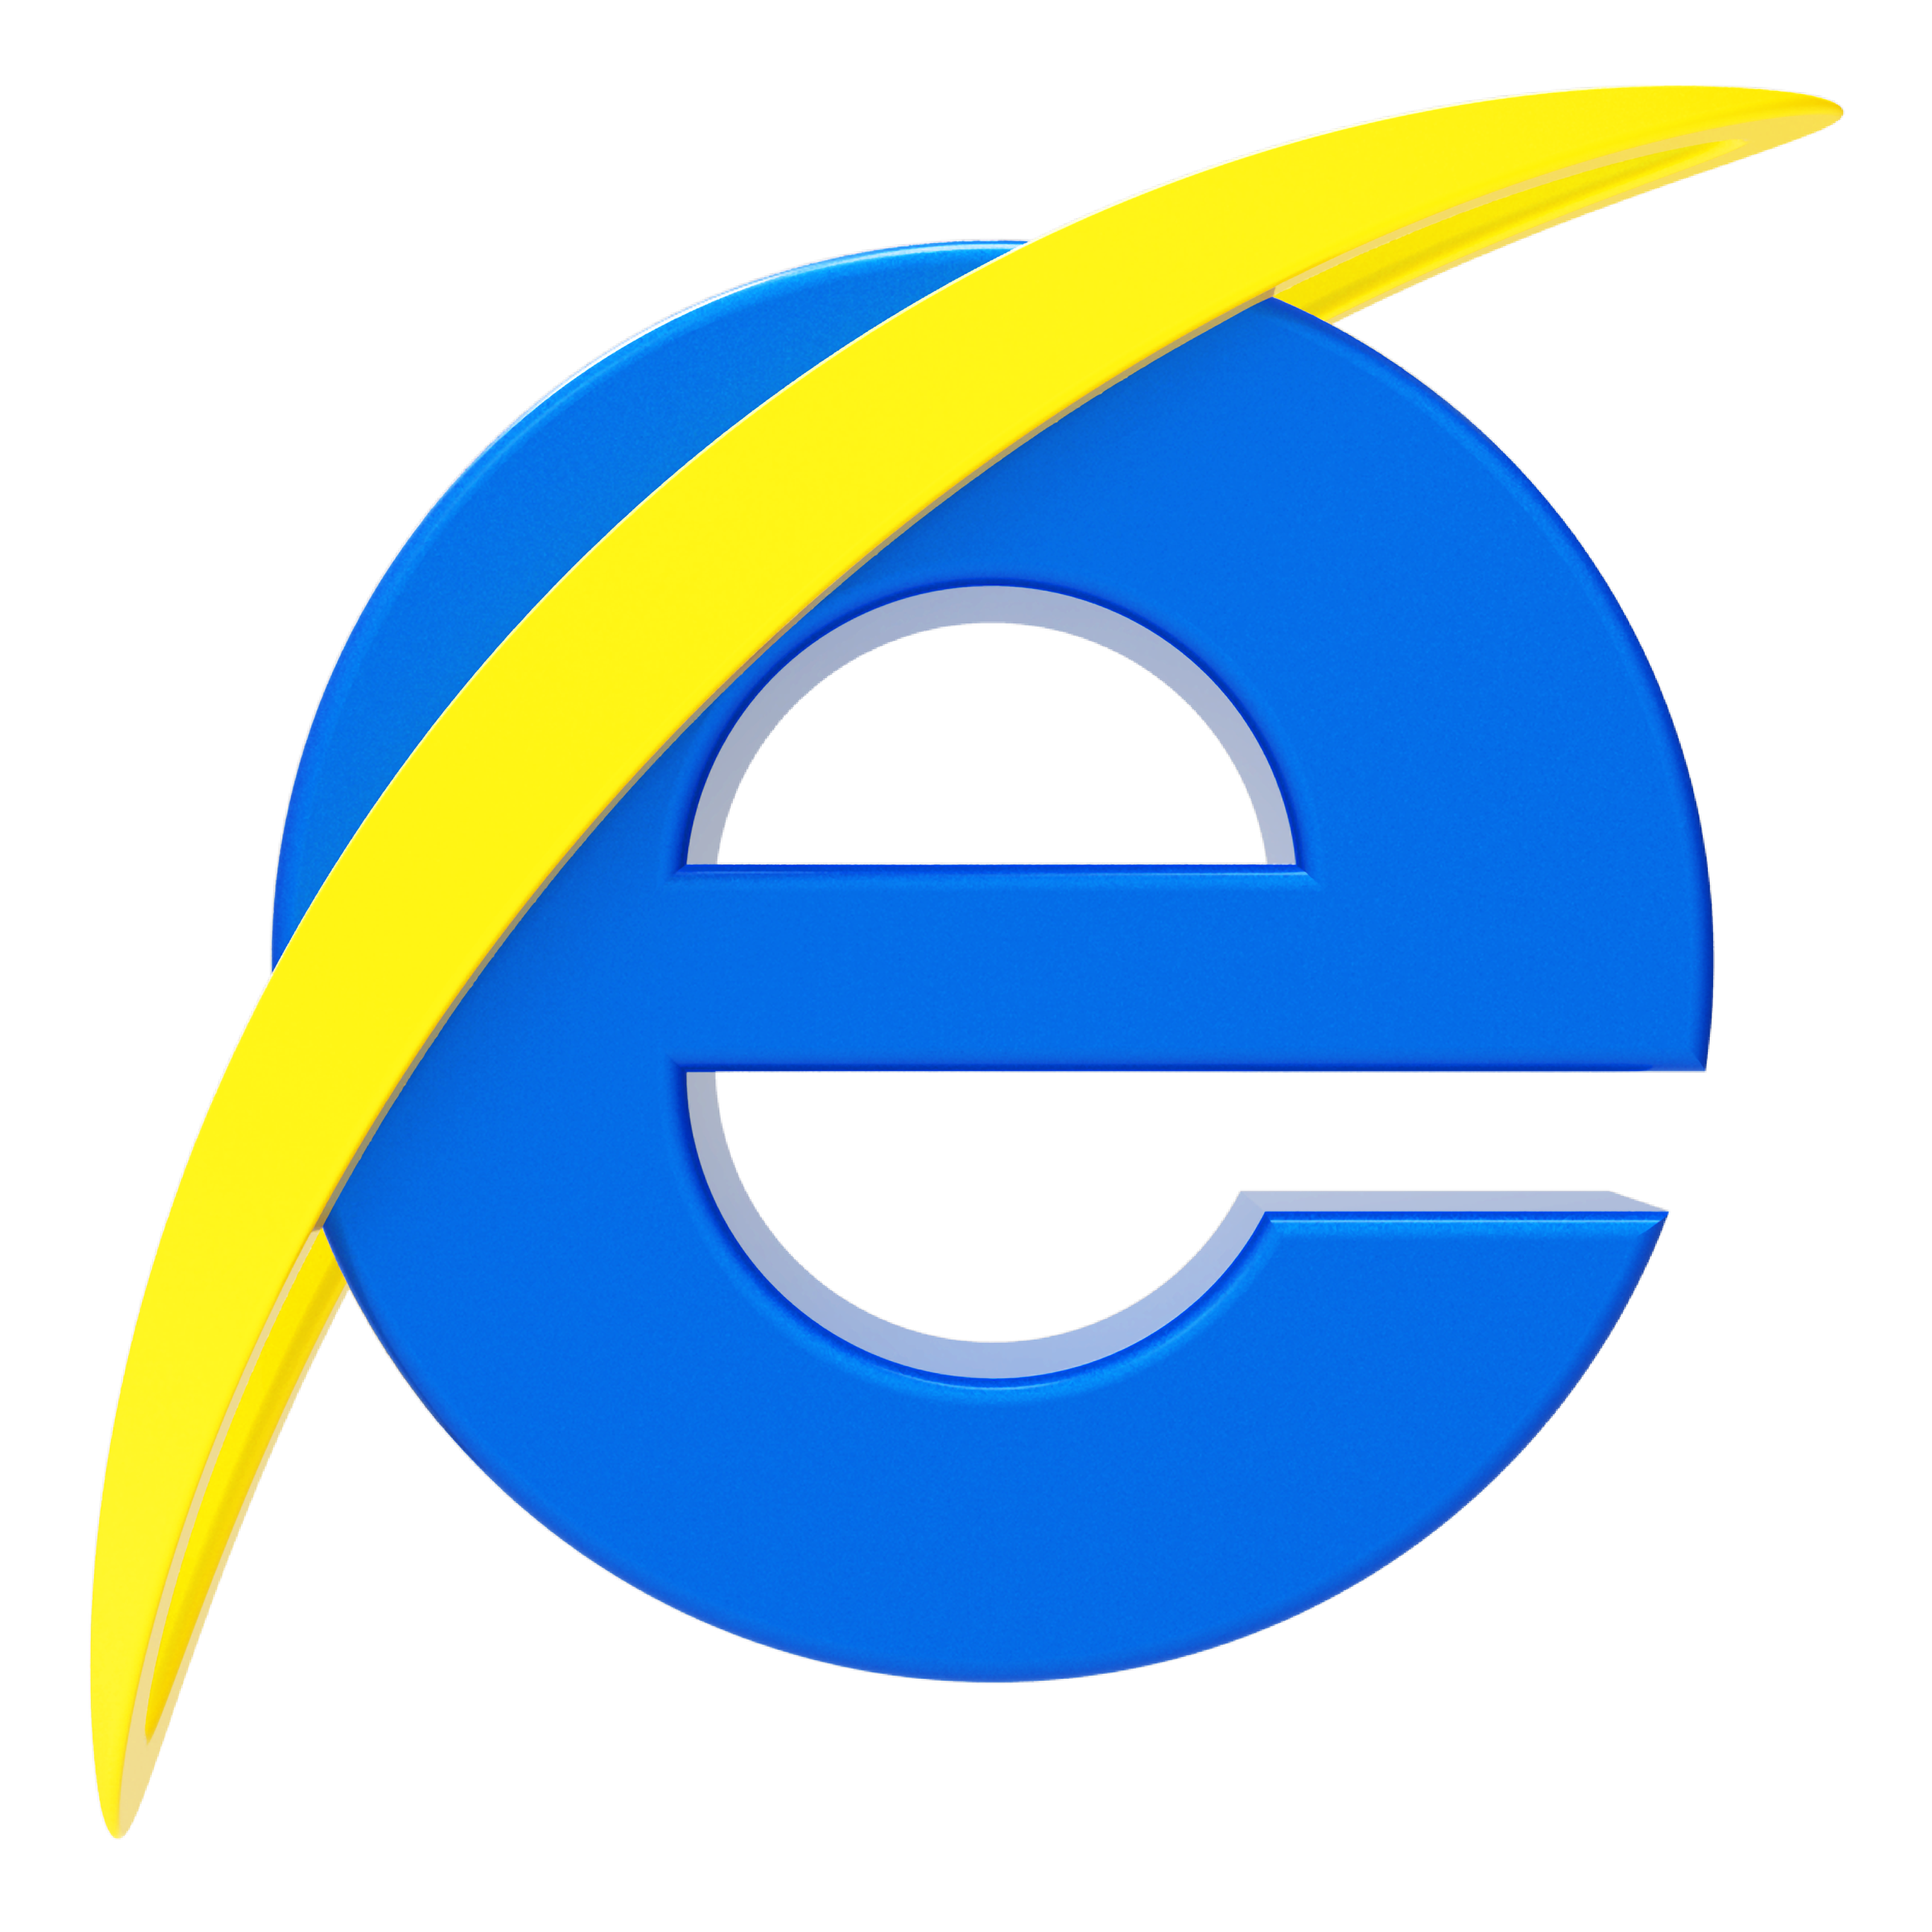 Internet Explorer Logo by llexandro on DeviantArt